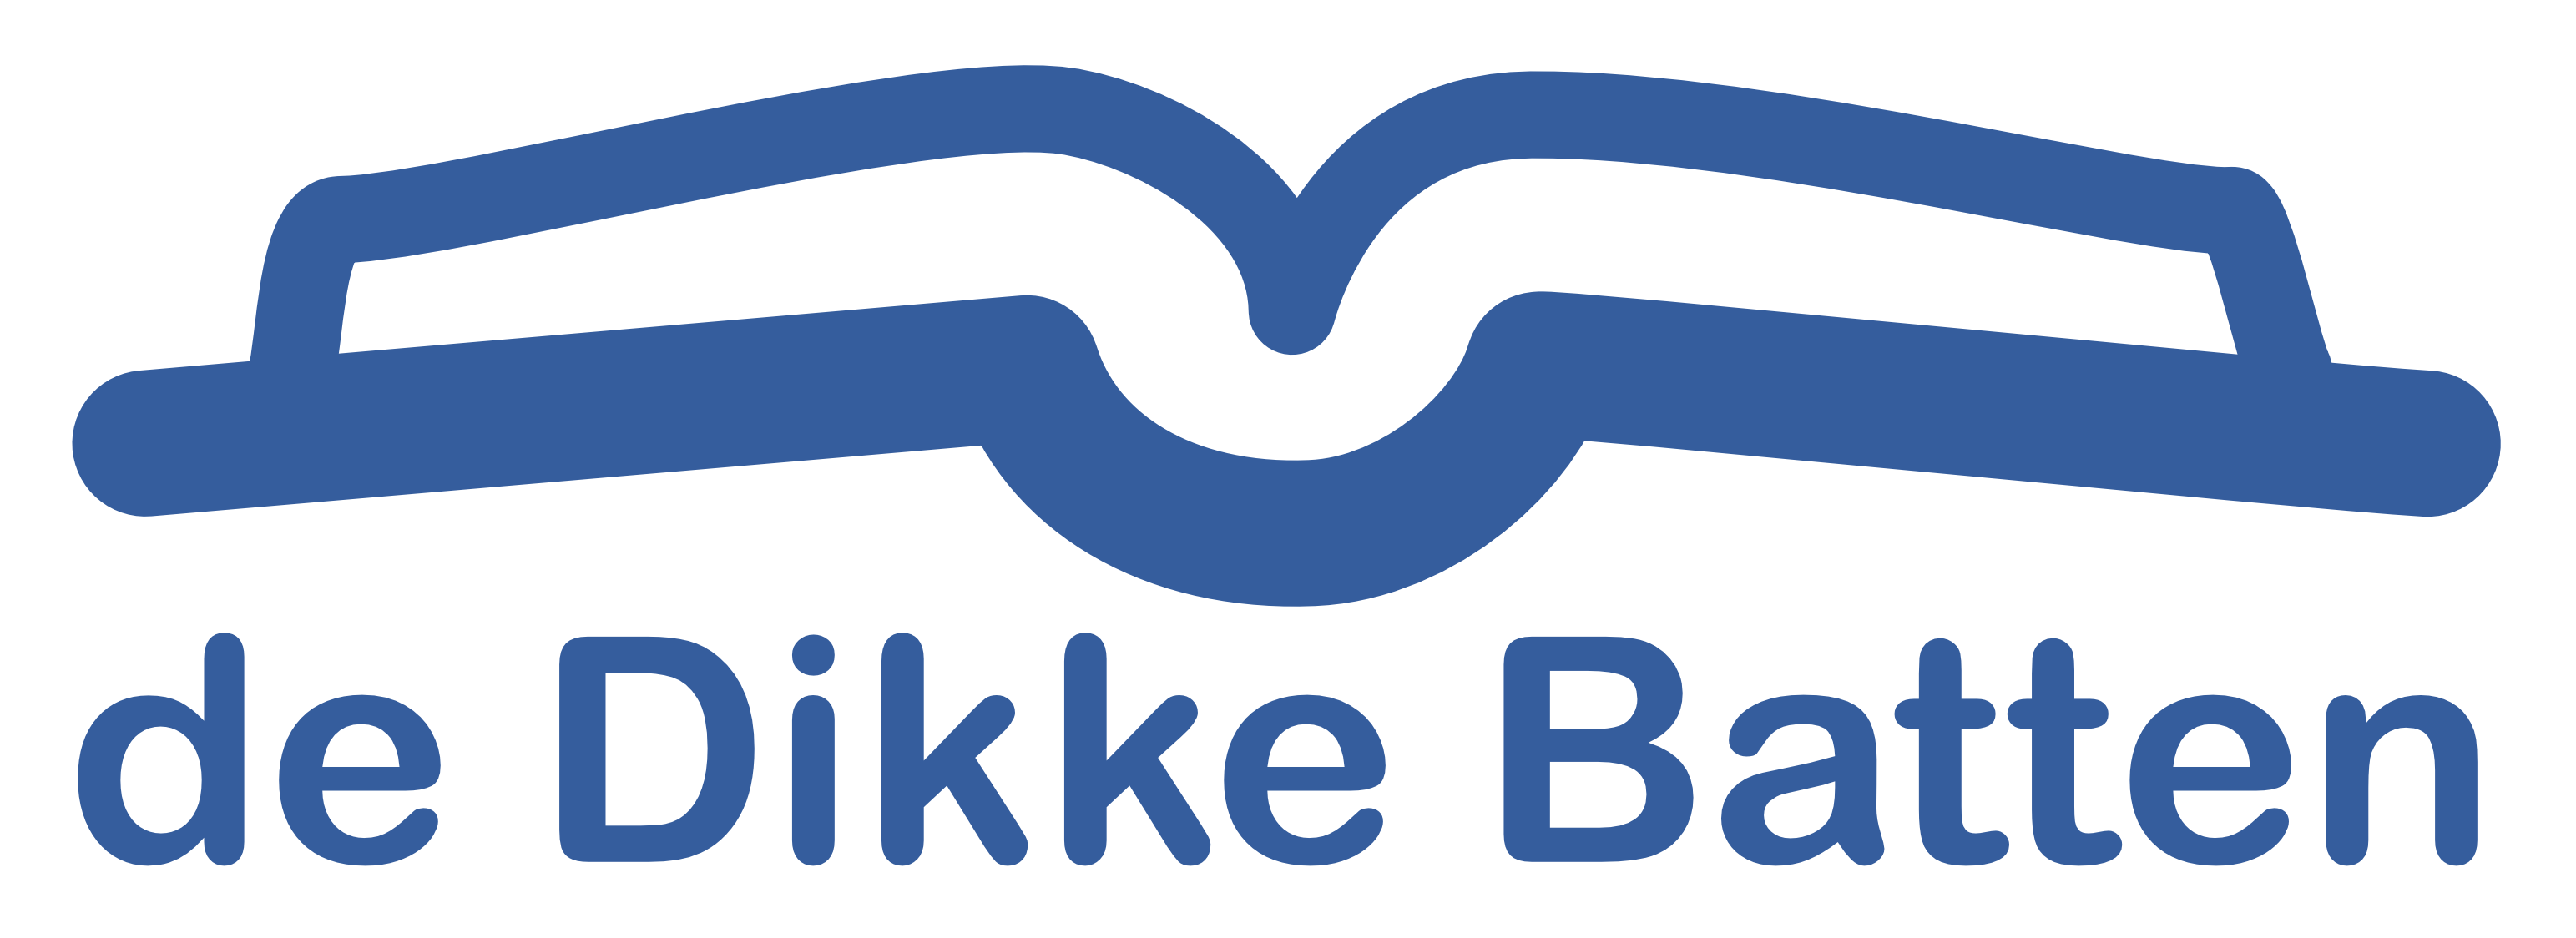 deDikkeBatten logo